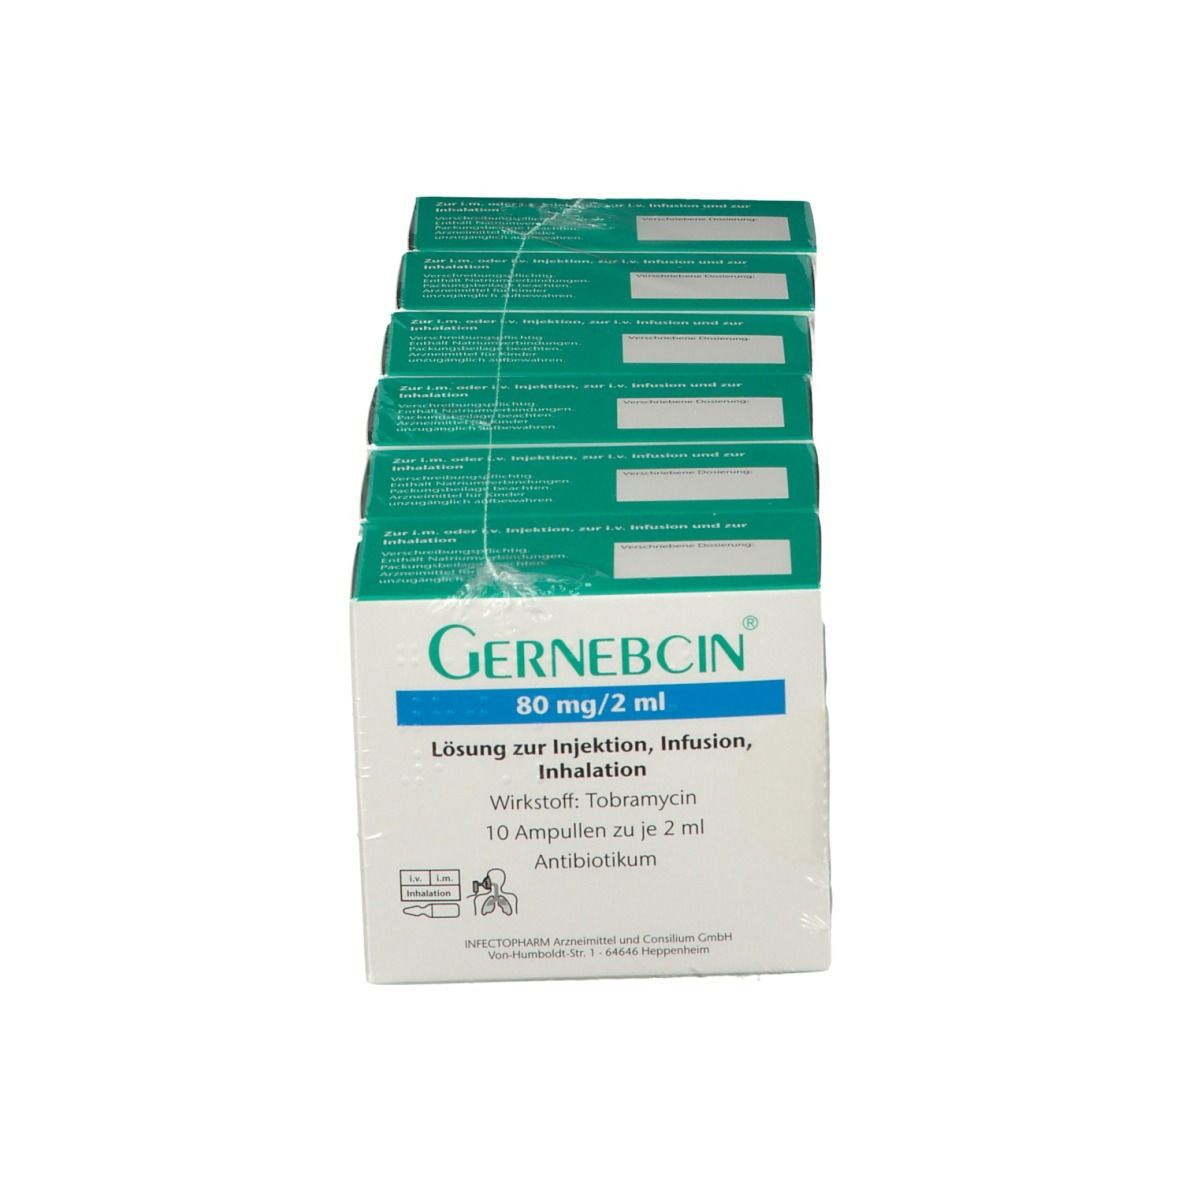 Gernebcin® 80 mg/2 ml